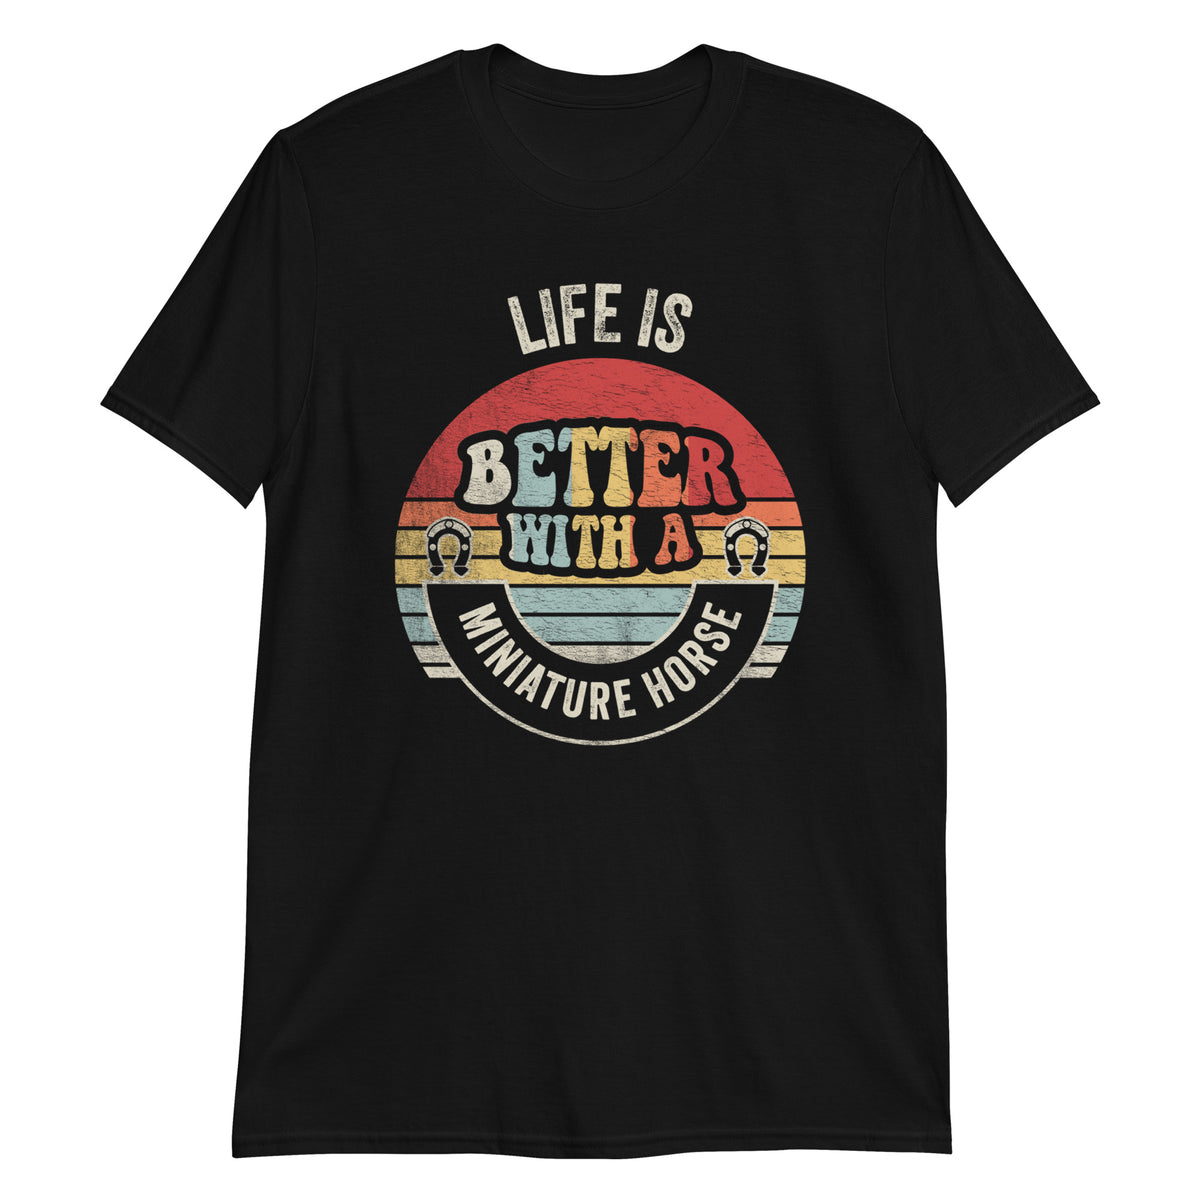 Life Is Better With A Miniature Horse Vintage Retro Men & Women T-Shirt